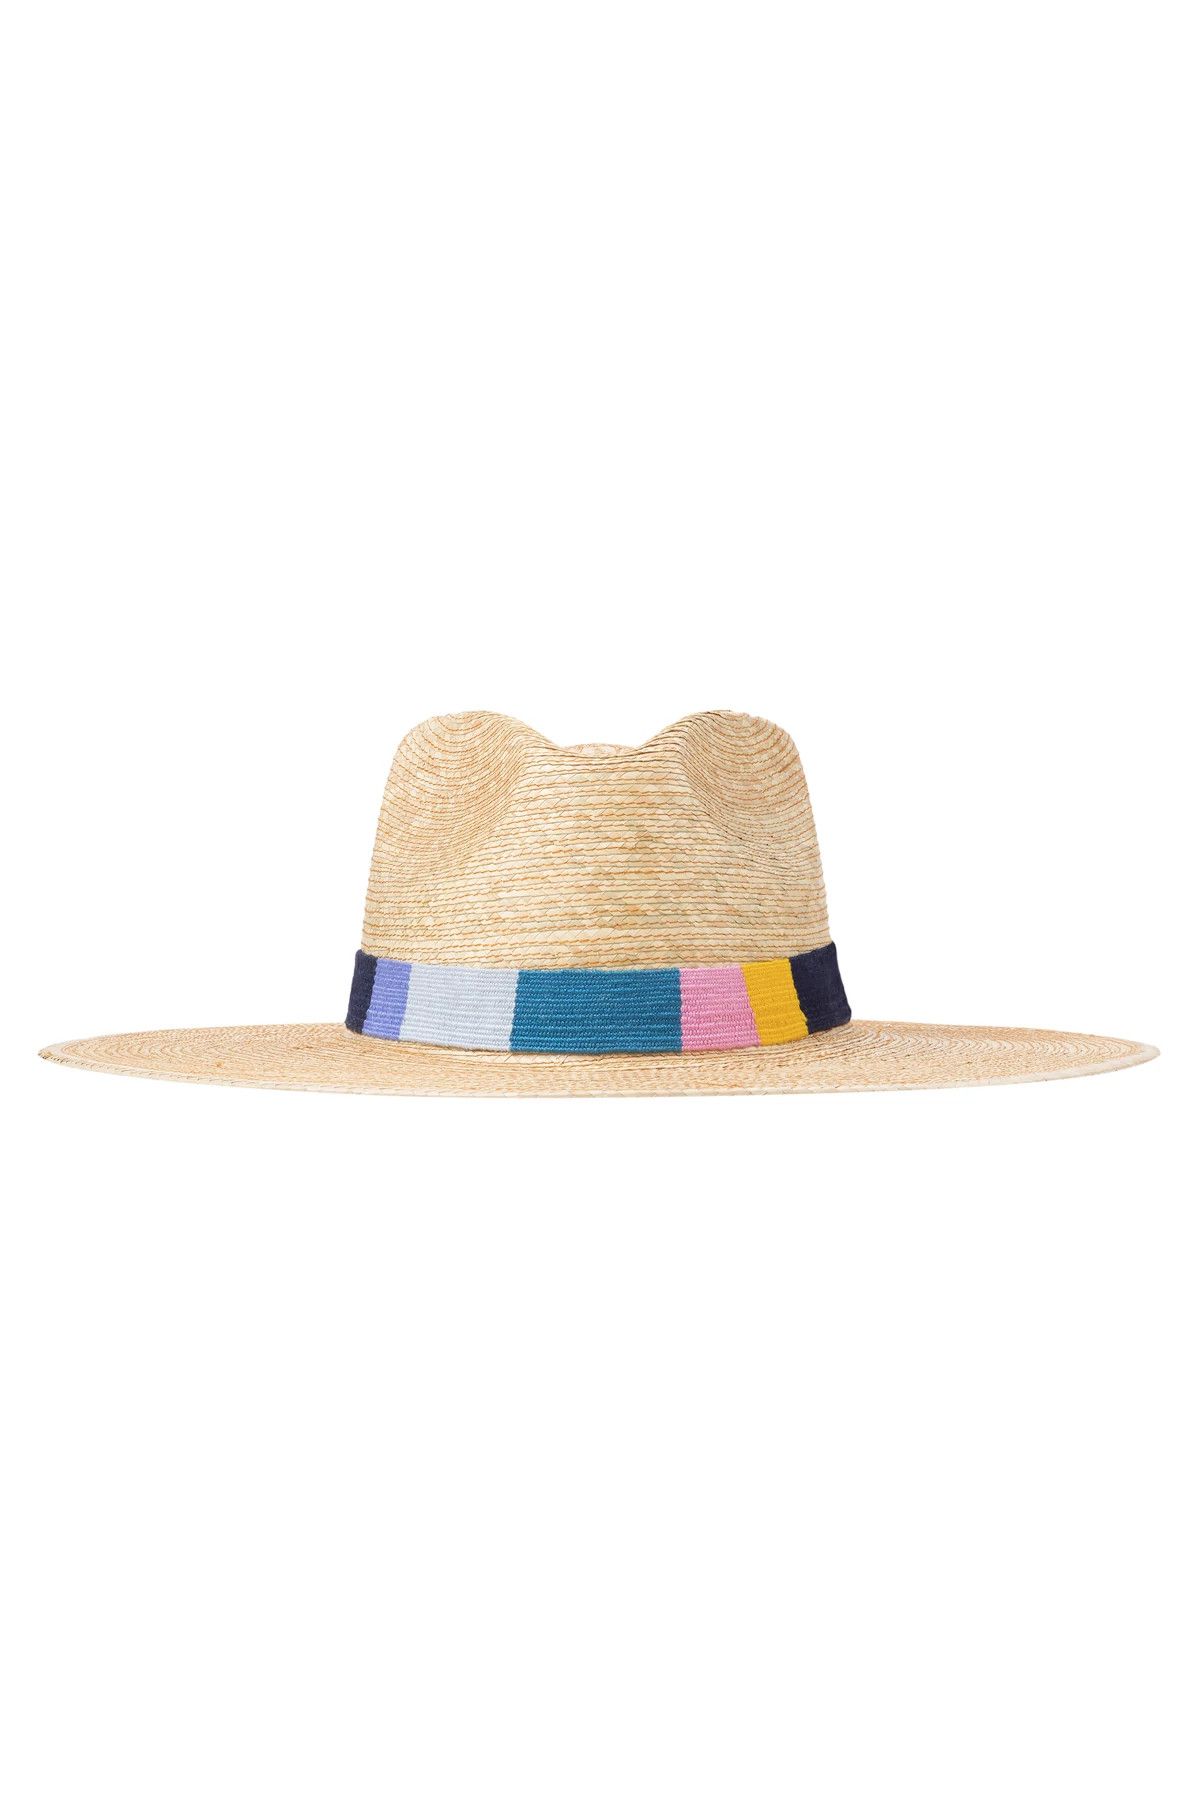 Ofelia Palm Panama Hat | Everything But Water